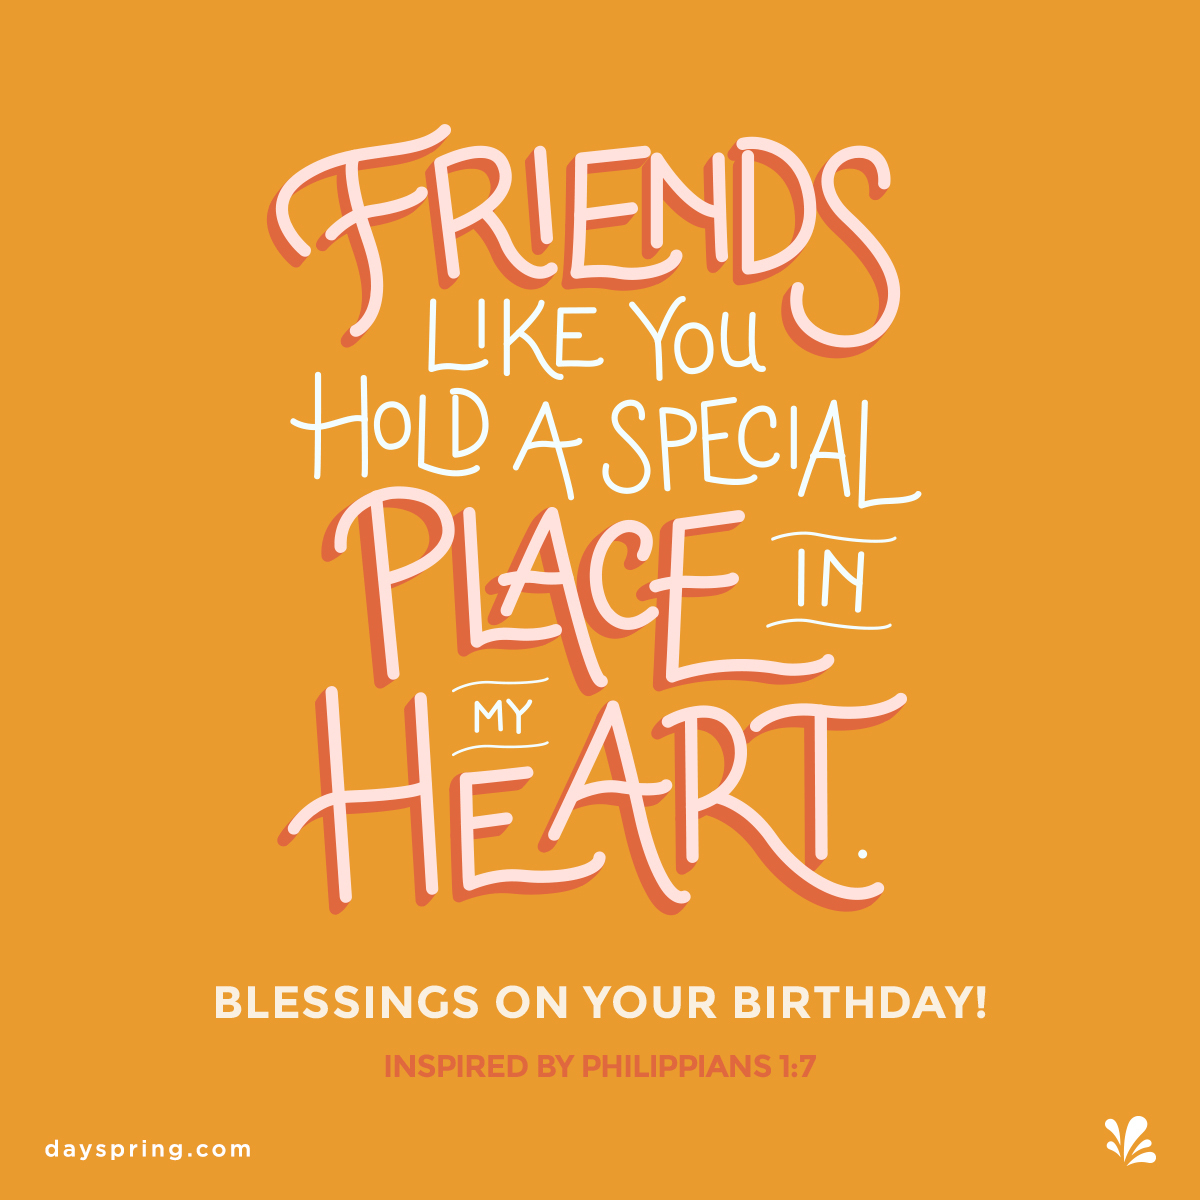 Birthday Ecards | Dayspring - Free Printable Christian Cards Online